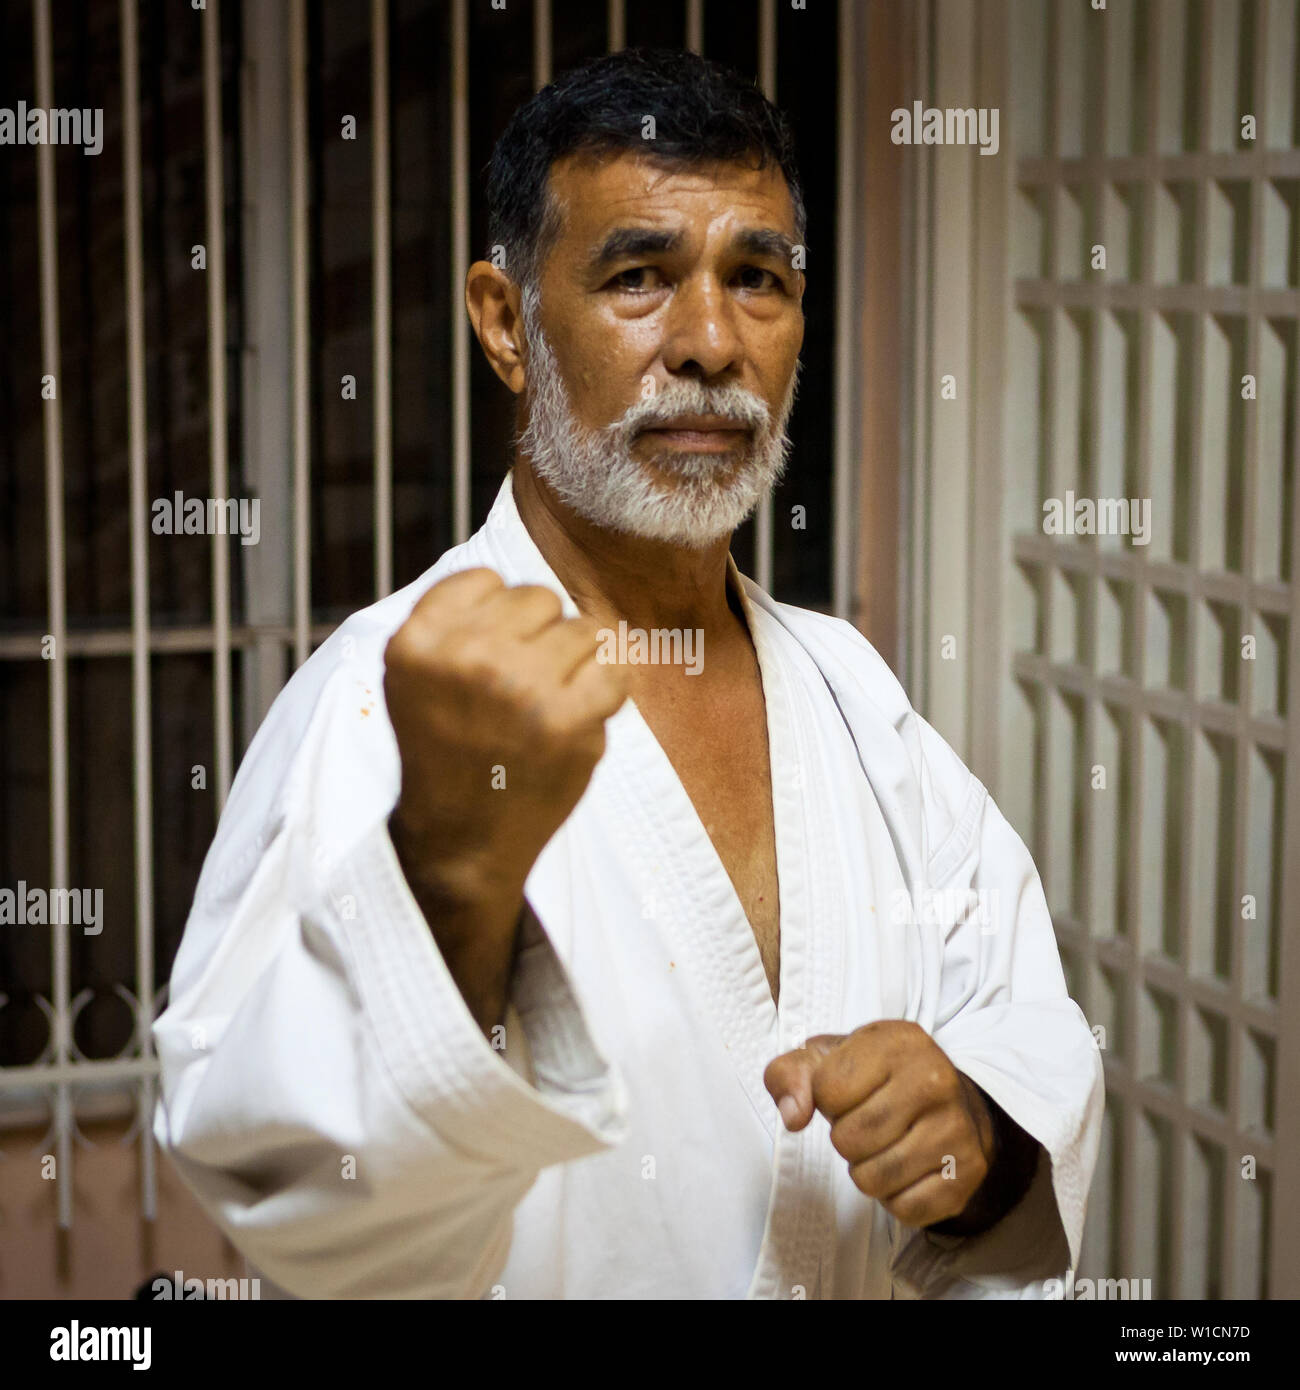 Portrait von Sensei Carlos Martinez, die Okinawanischen Gojo Ryu Karate Schule in Penonome, Provinz Cocle, Republik Panama führte. Sensei Carlos starb im Februar 2017. Die Schule wurde ein Teil der IOGKF, International Okinawan Goju Ryu Karate Federation. Februar, 2015. Stockfoto